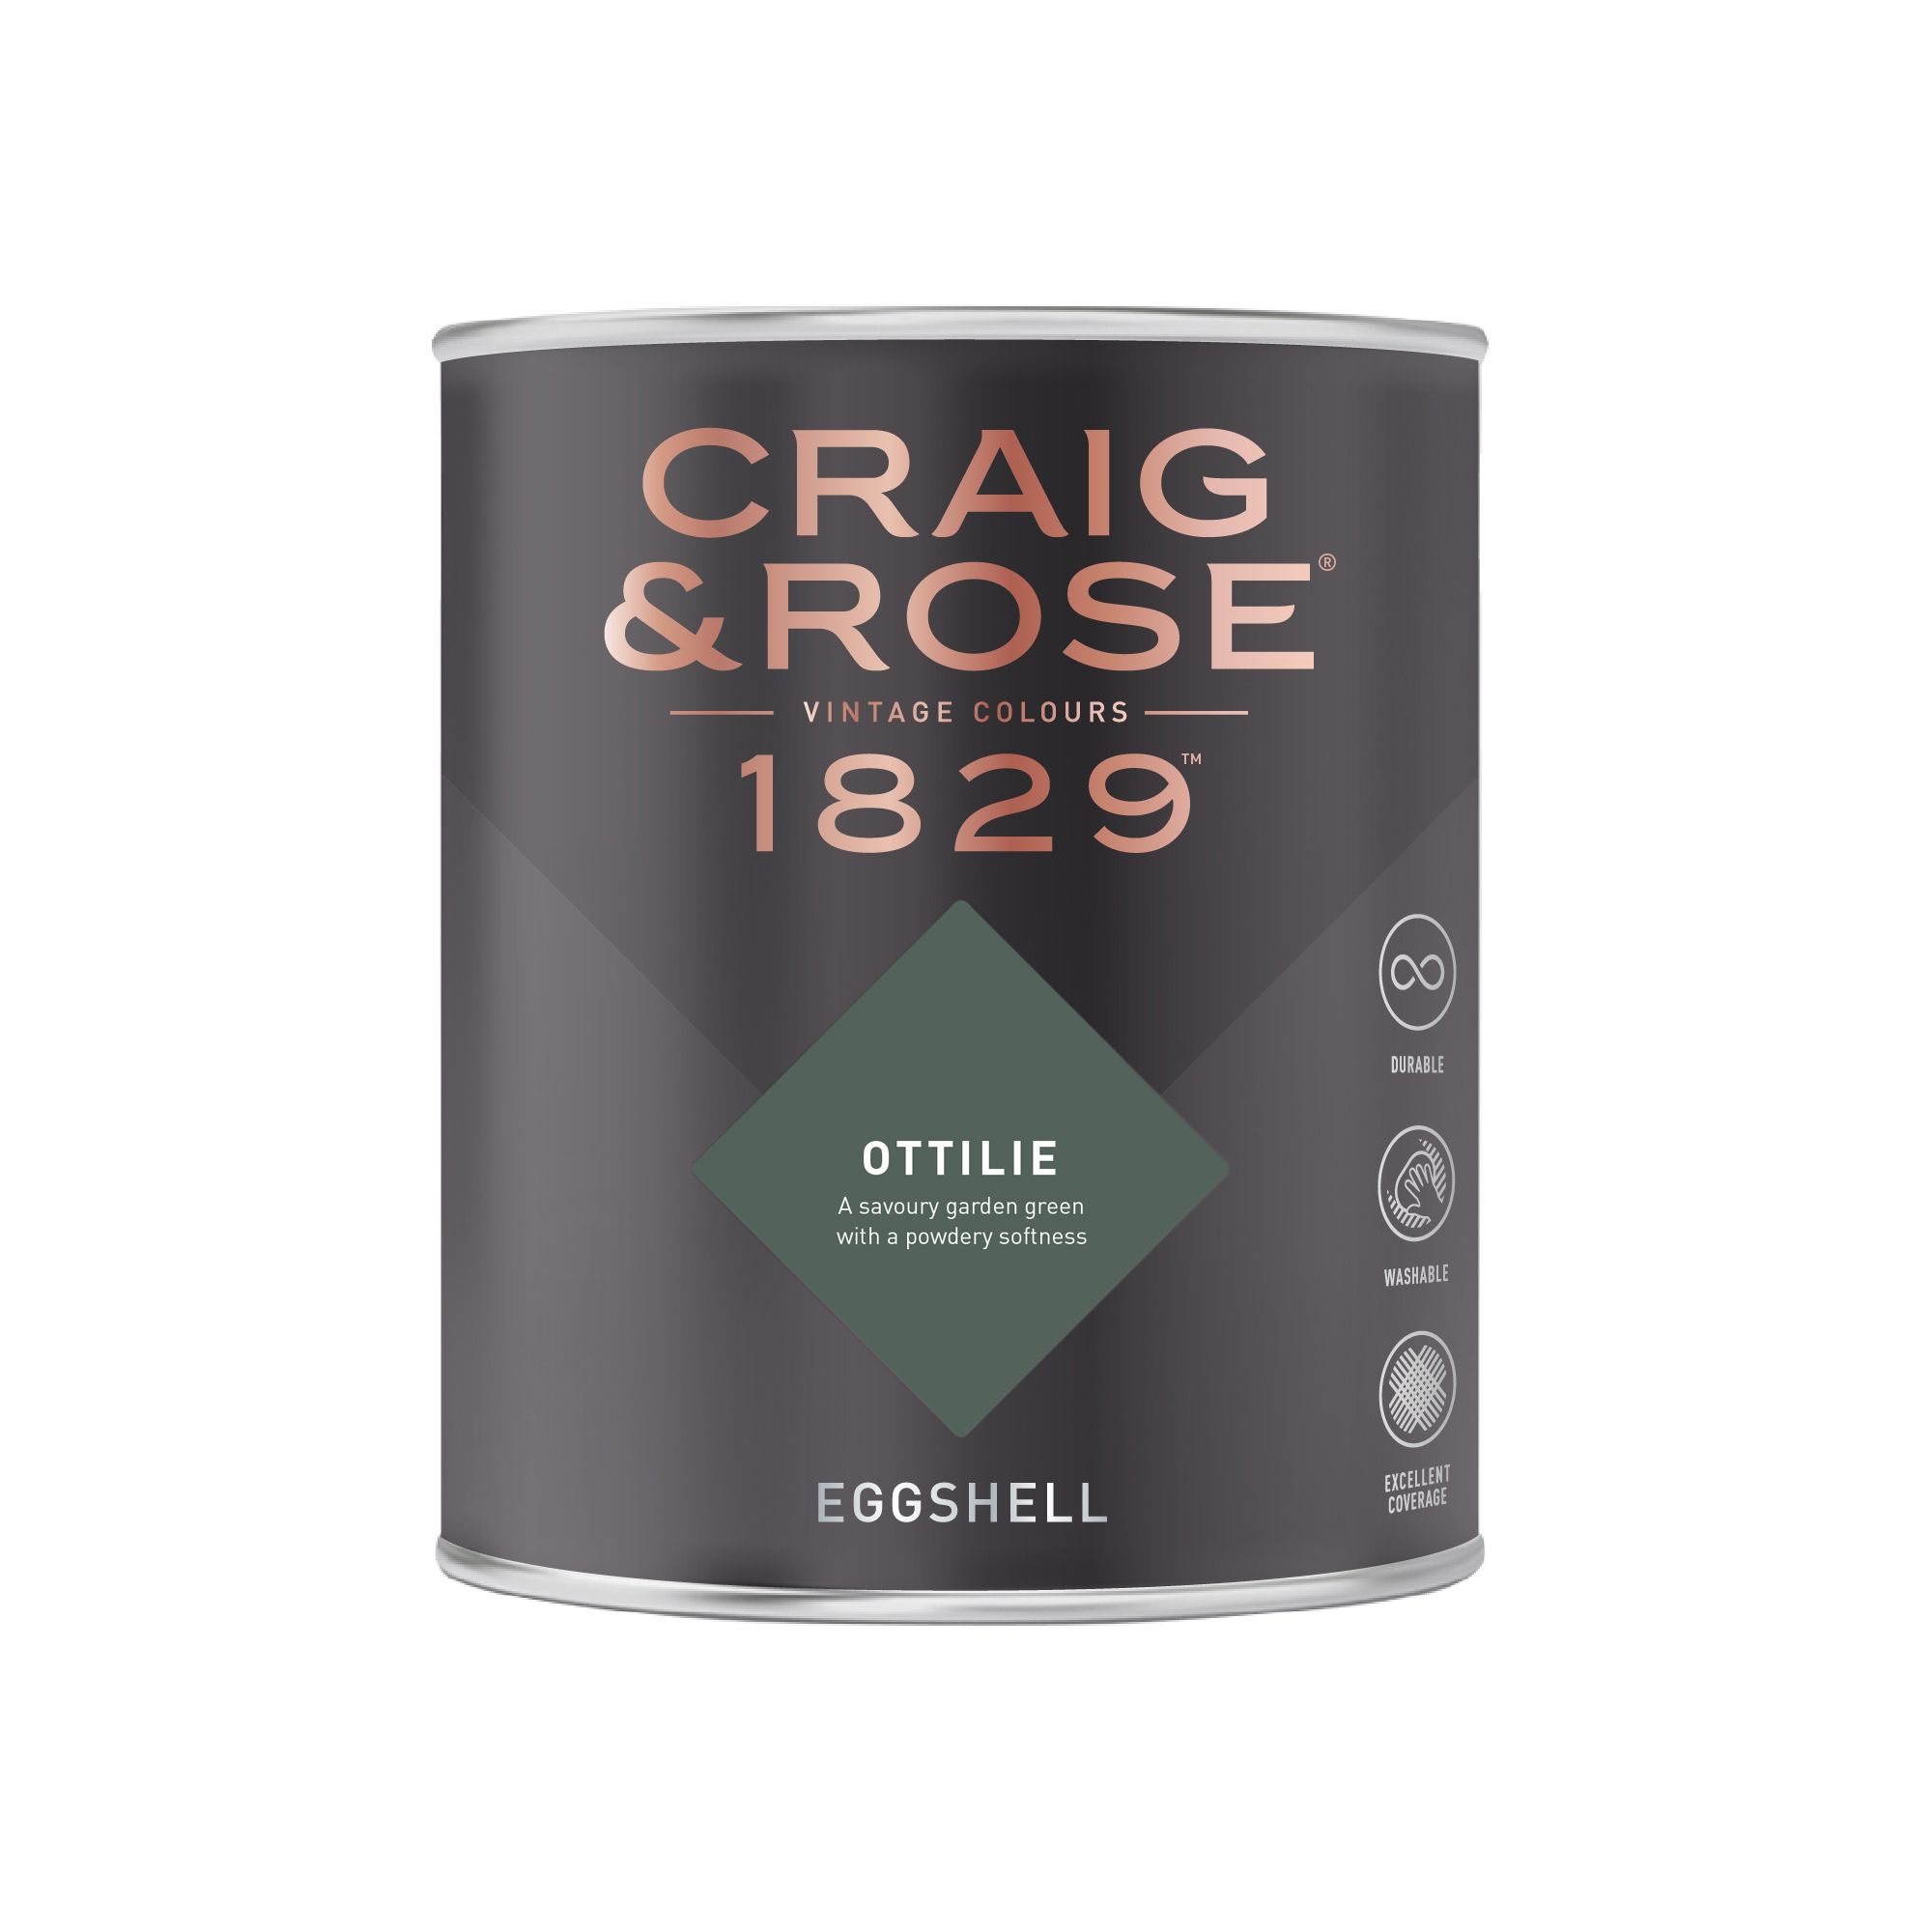 Craig & Rose 1829 Ottilie Eggshell Wall paint, 750ml